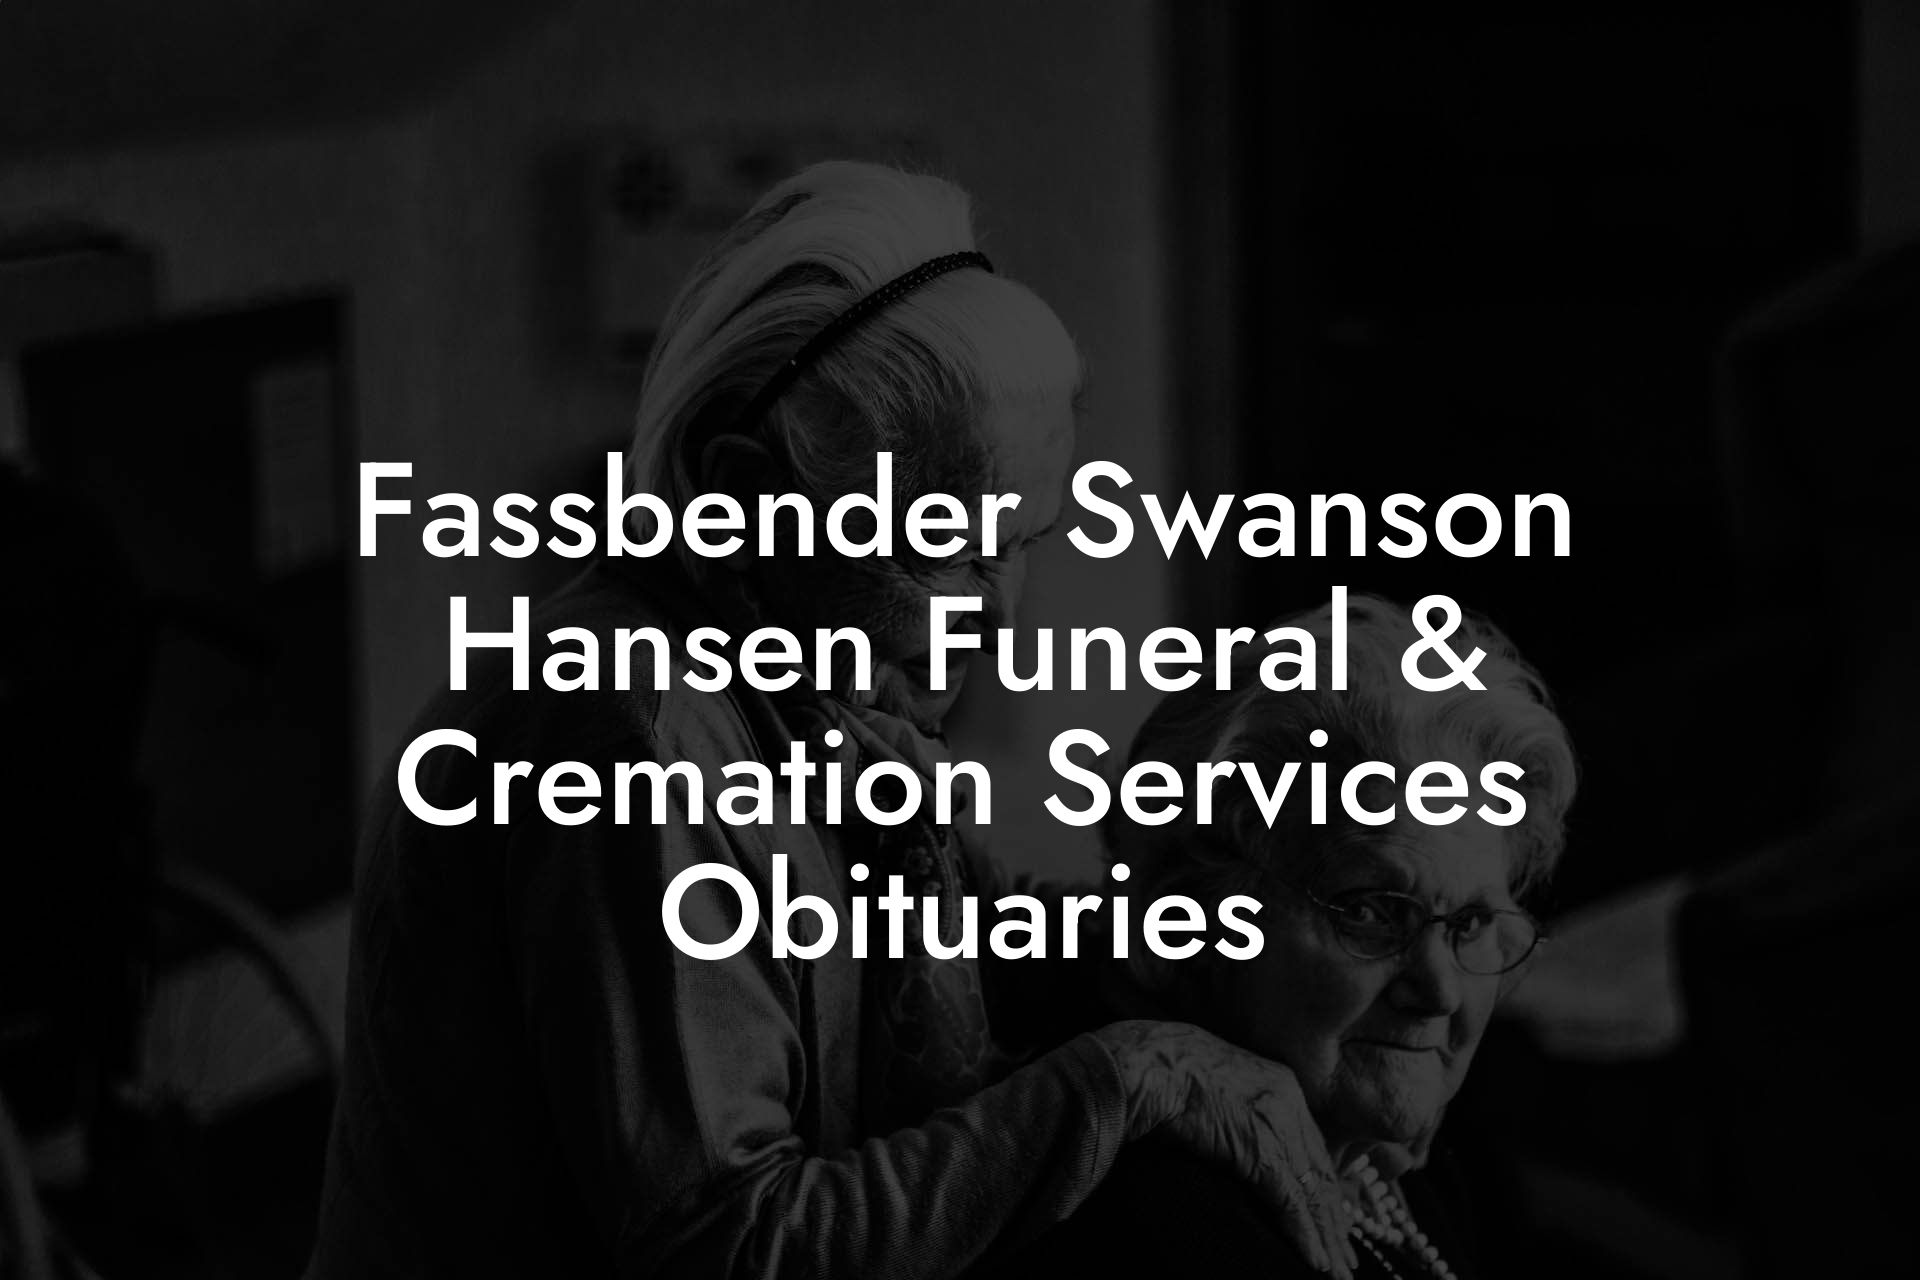 Fassbender Swanson Hansen Funeral & Cremation Services Obituaries